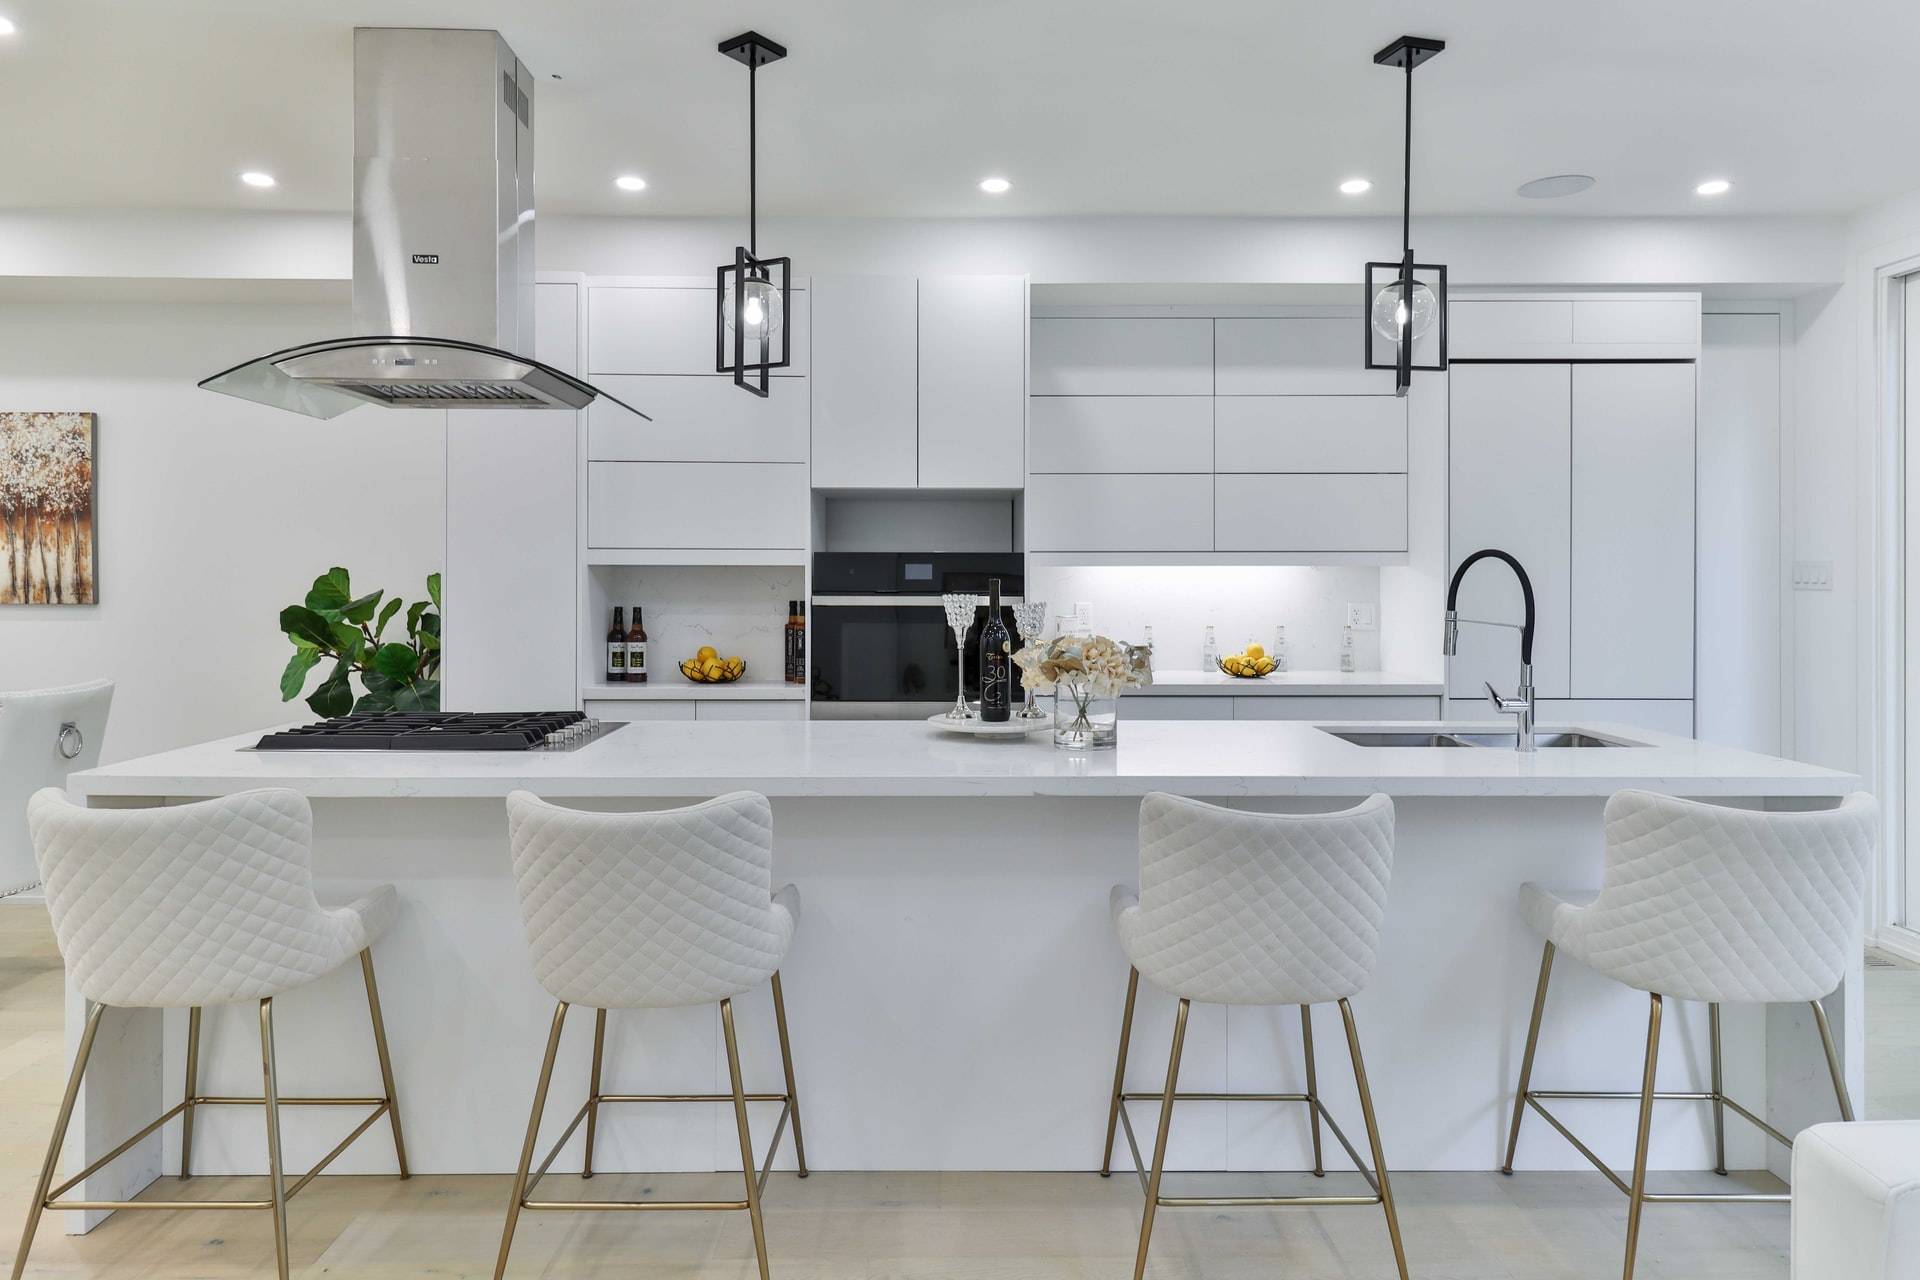 Sleek cabinets for an elegant kitchen (from Unsplash)